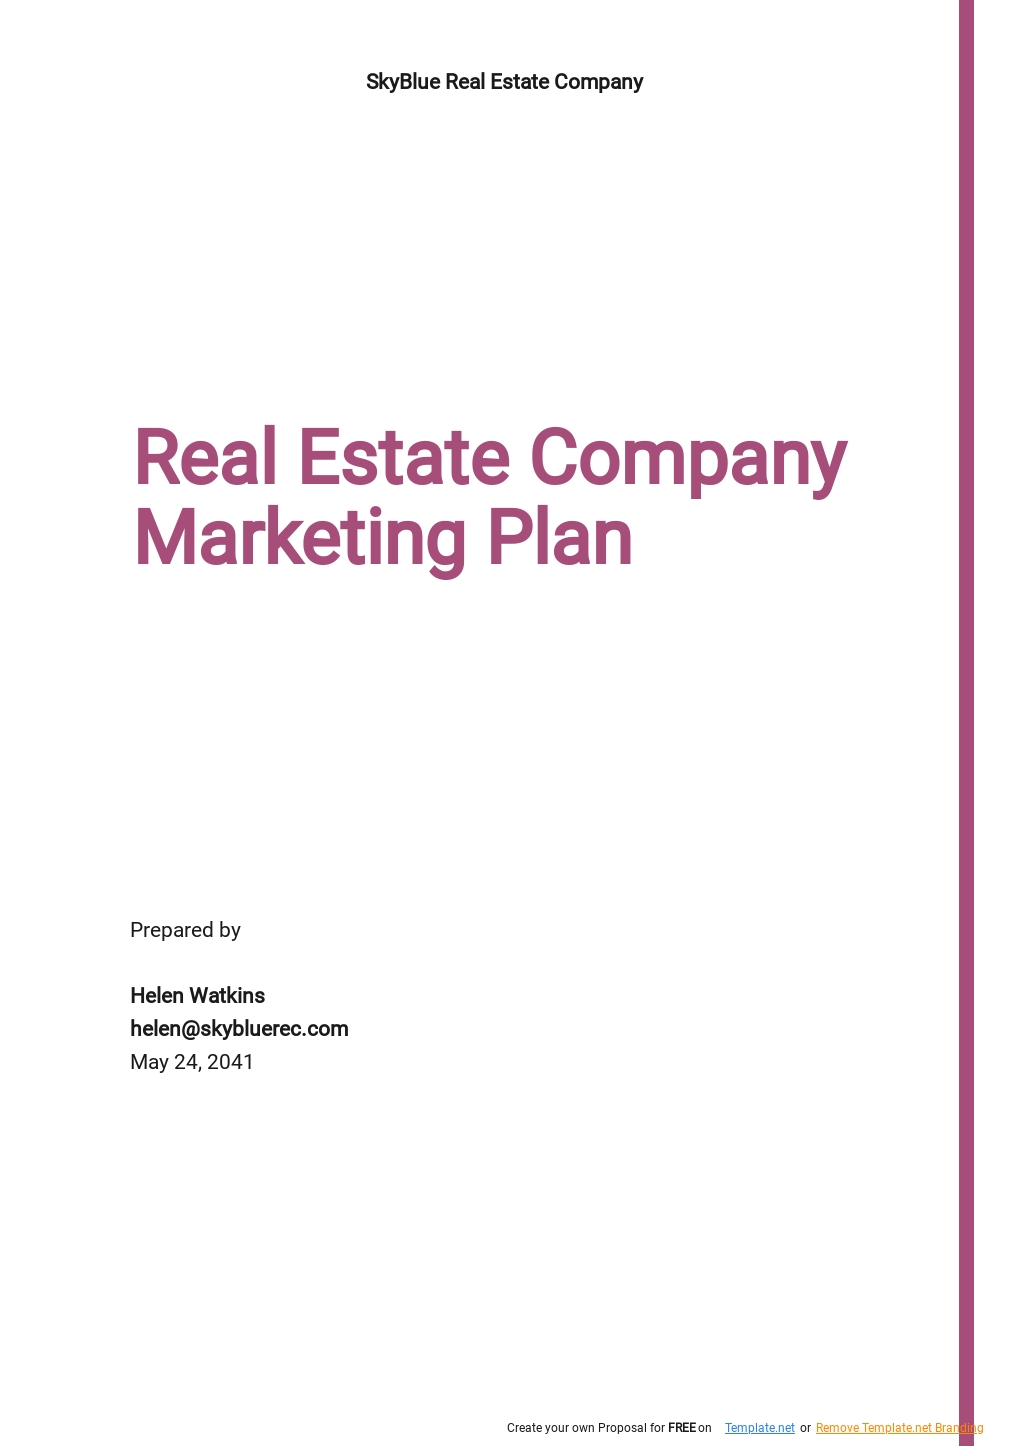 Real Estate Company Marketing Plan Template